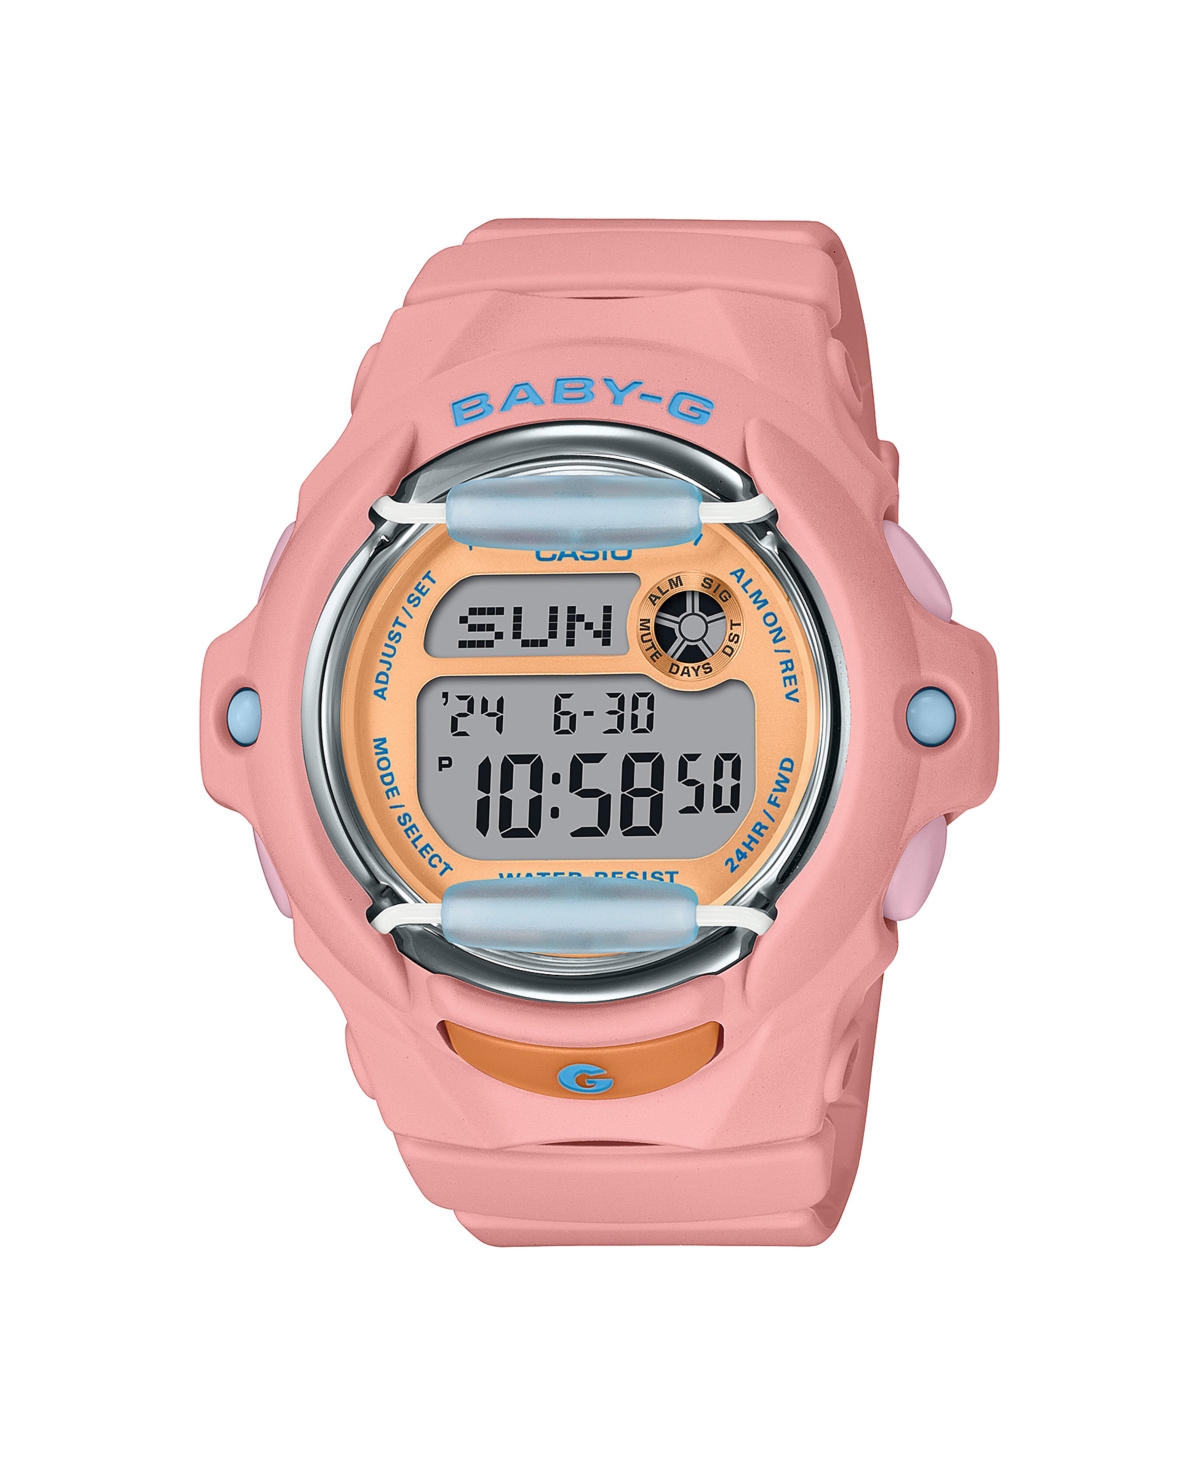 G-shock Women's Baby-g Digital Coral Resin Watch 42.6mm, Bg169pb-4